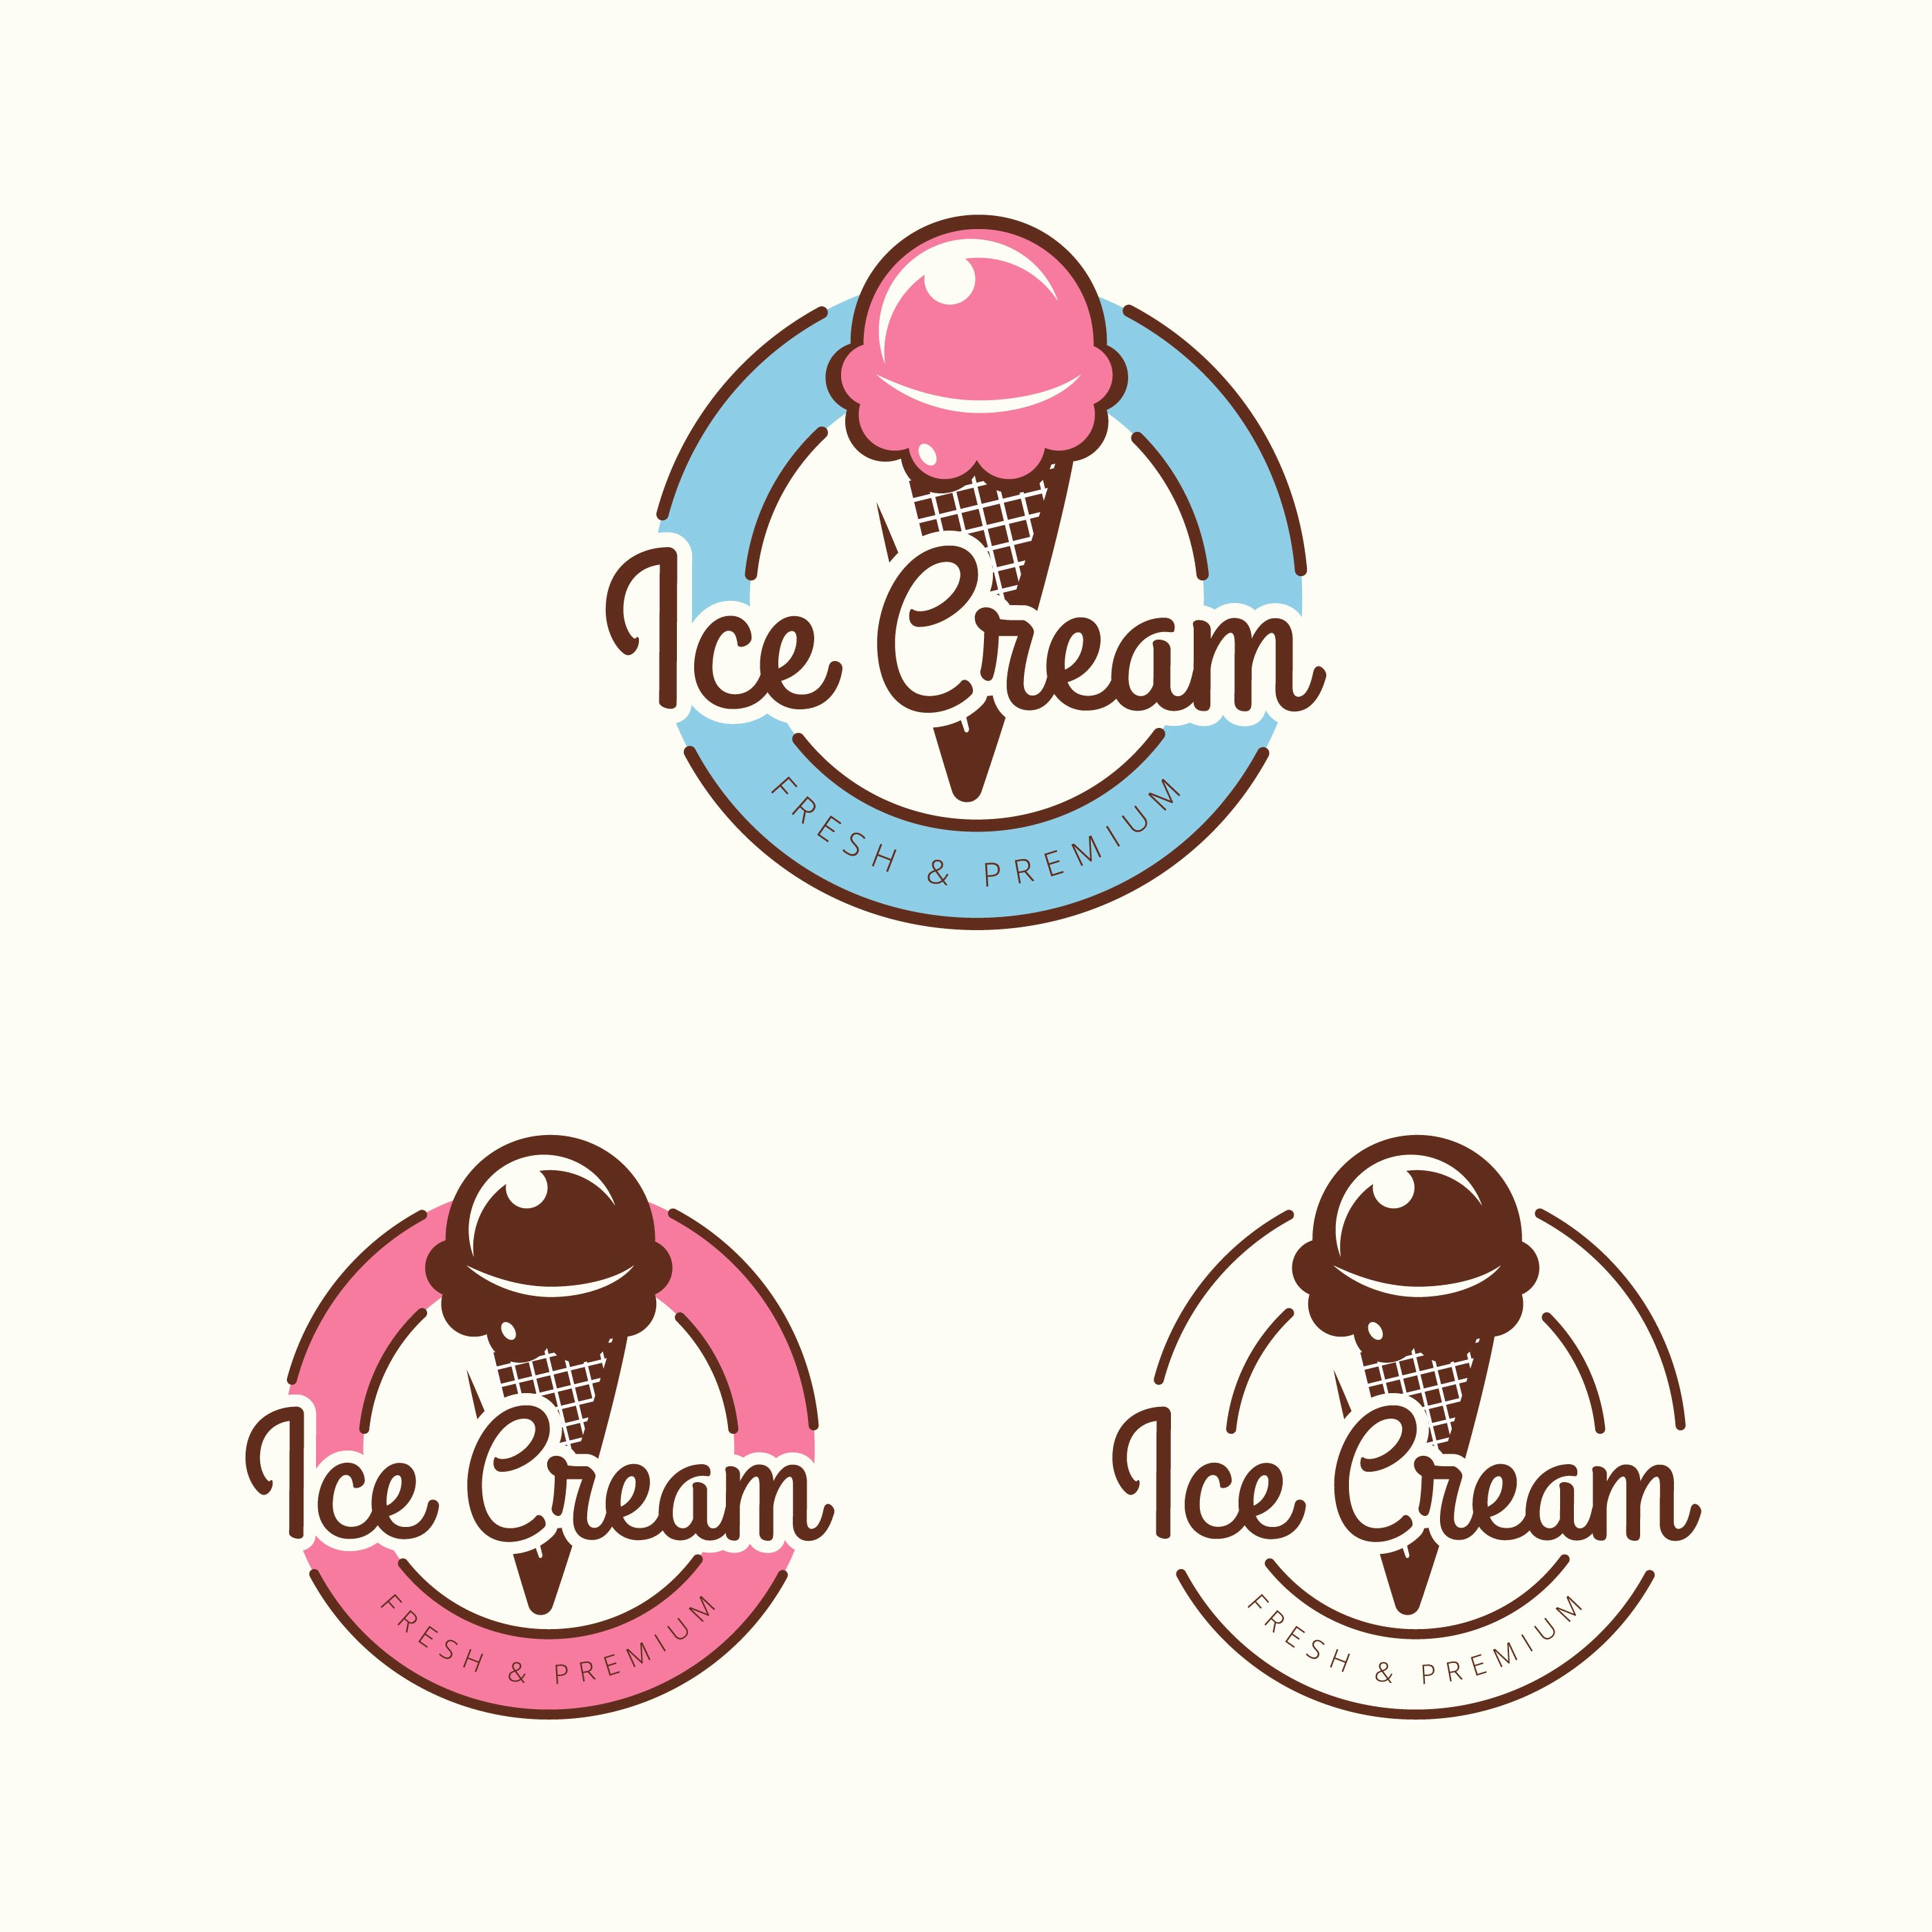 Ice Cream Shop Logo Beautiful Ice Cream Shop Logo Download Free Vector Art Stock